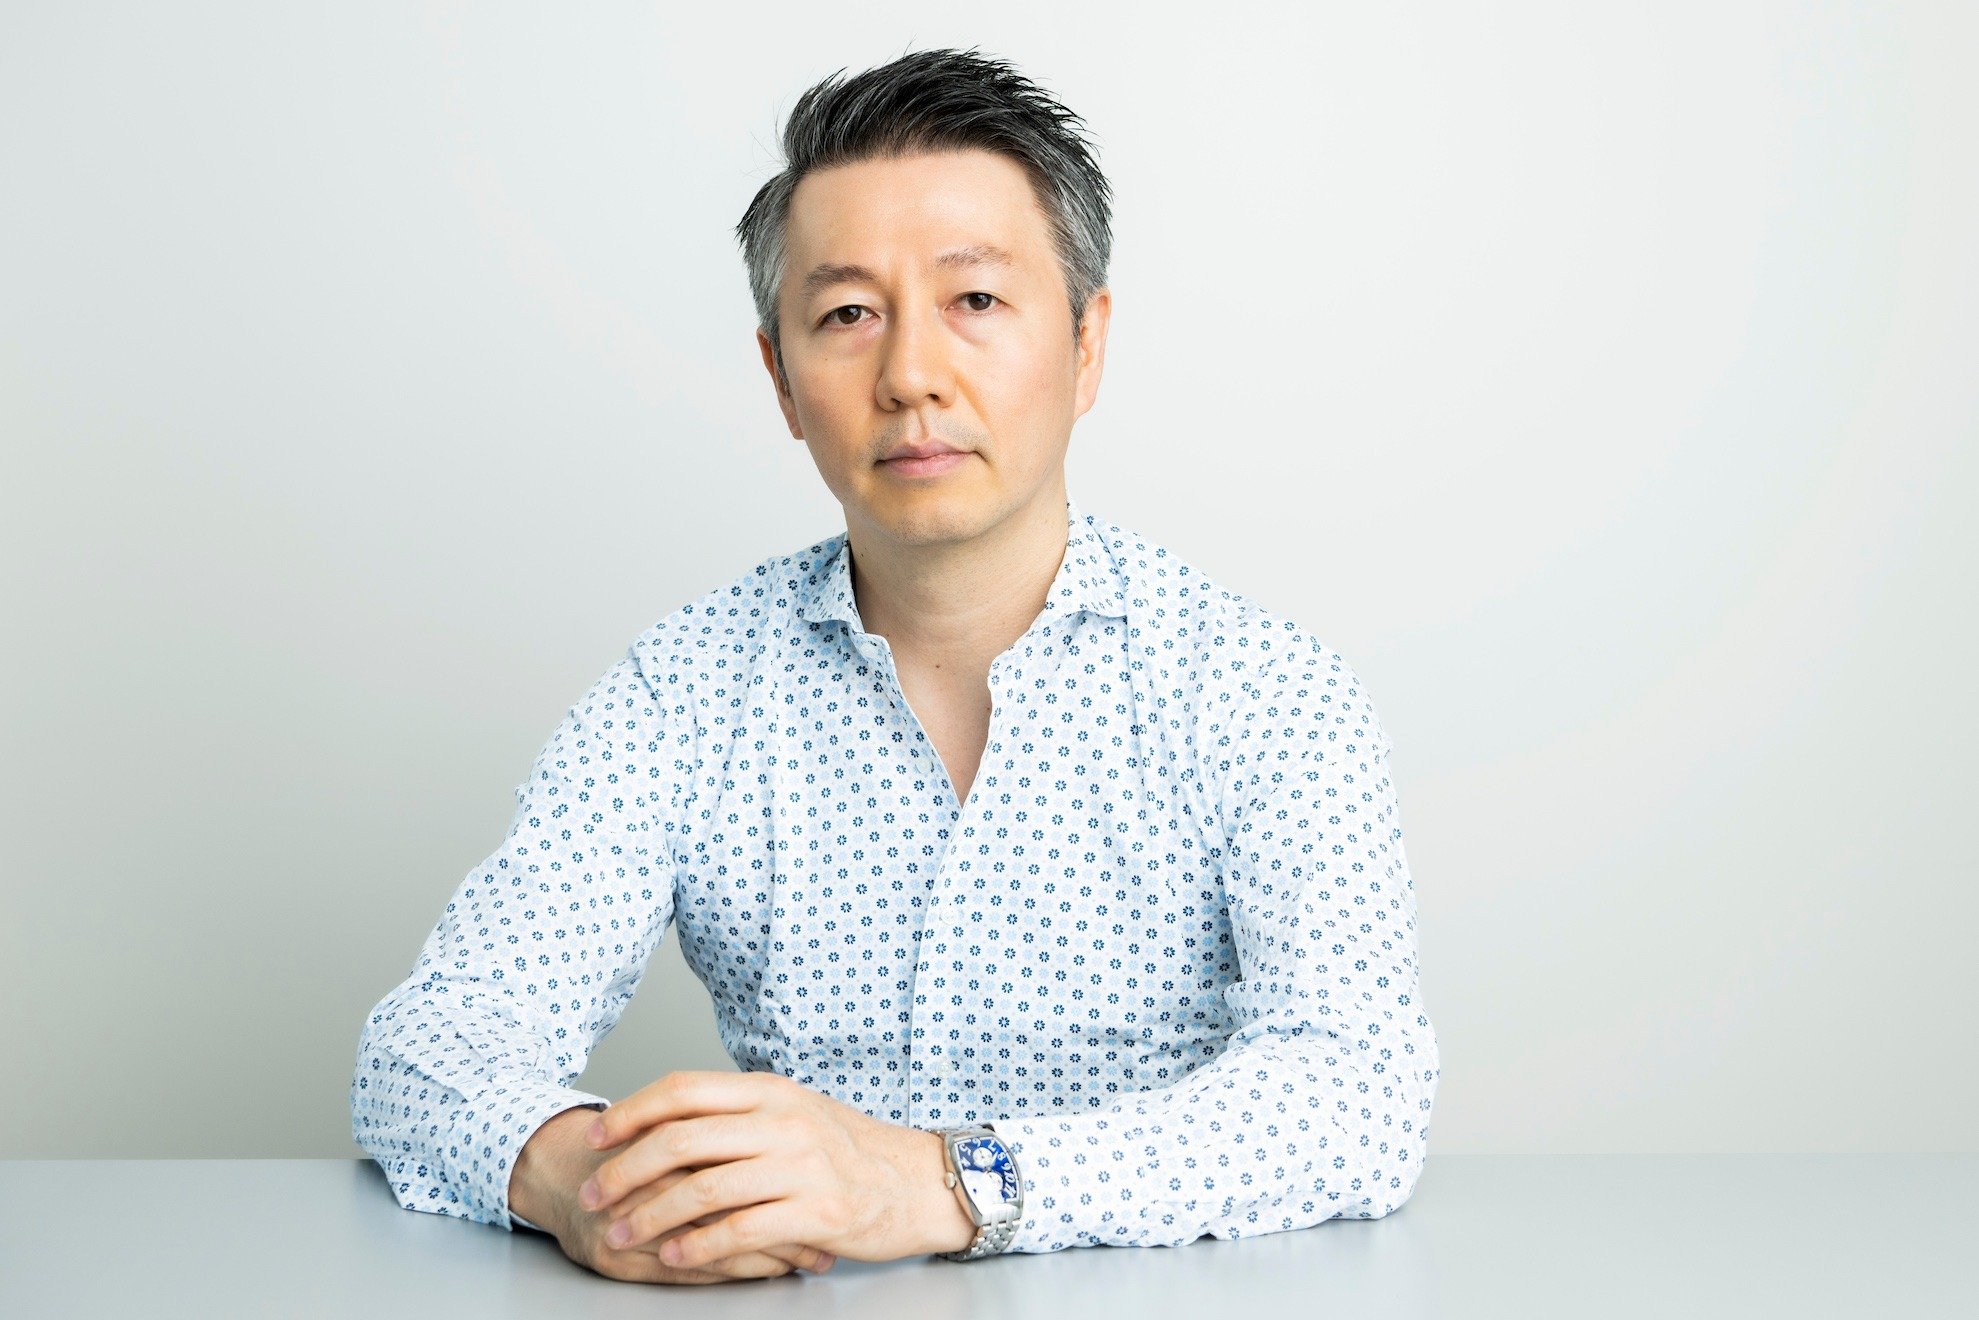 DNX Venturesマネージングパートナーの倉林陽氏